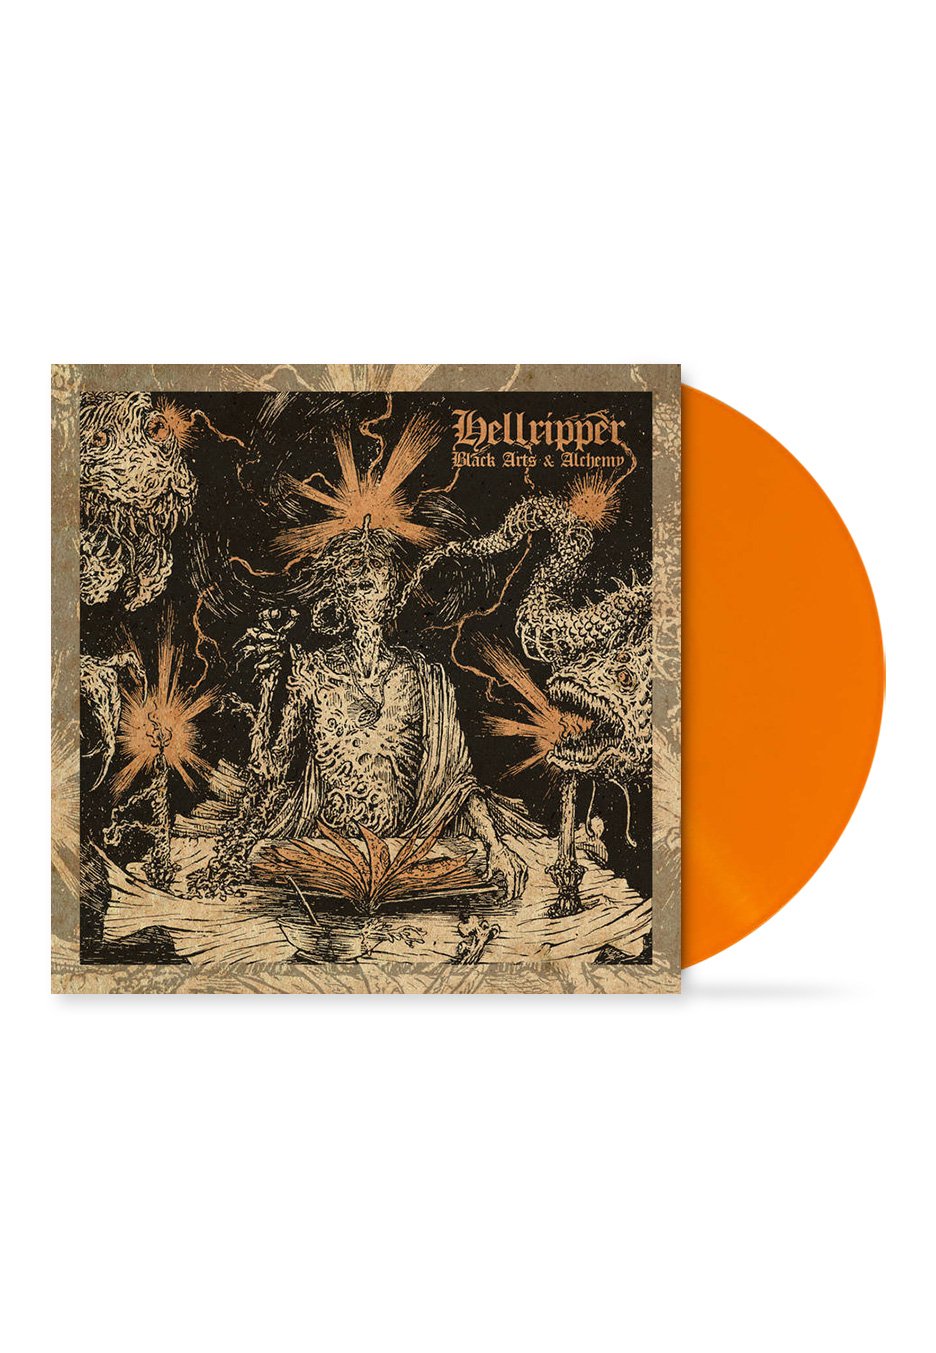 Hellripper - Black Arts & Alchemy Ltd. Orange - Colored Vinyl